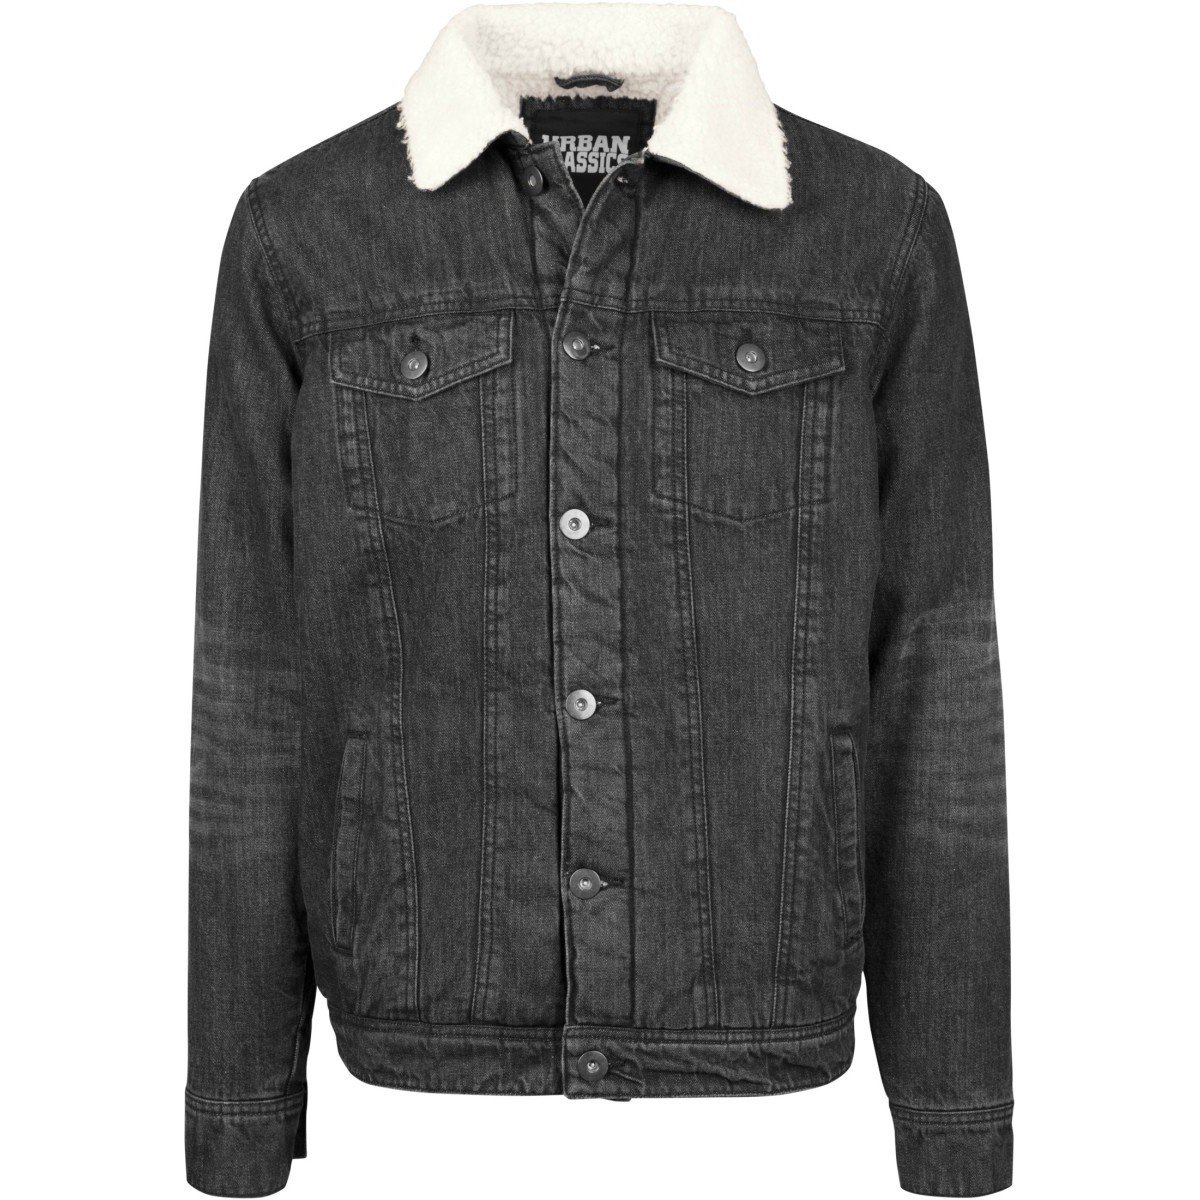 Buy Urban Classics - SHERPA Denim Jacket black washed